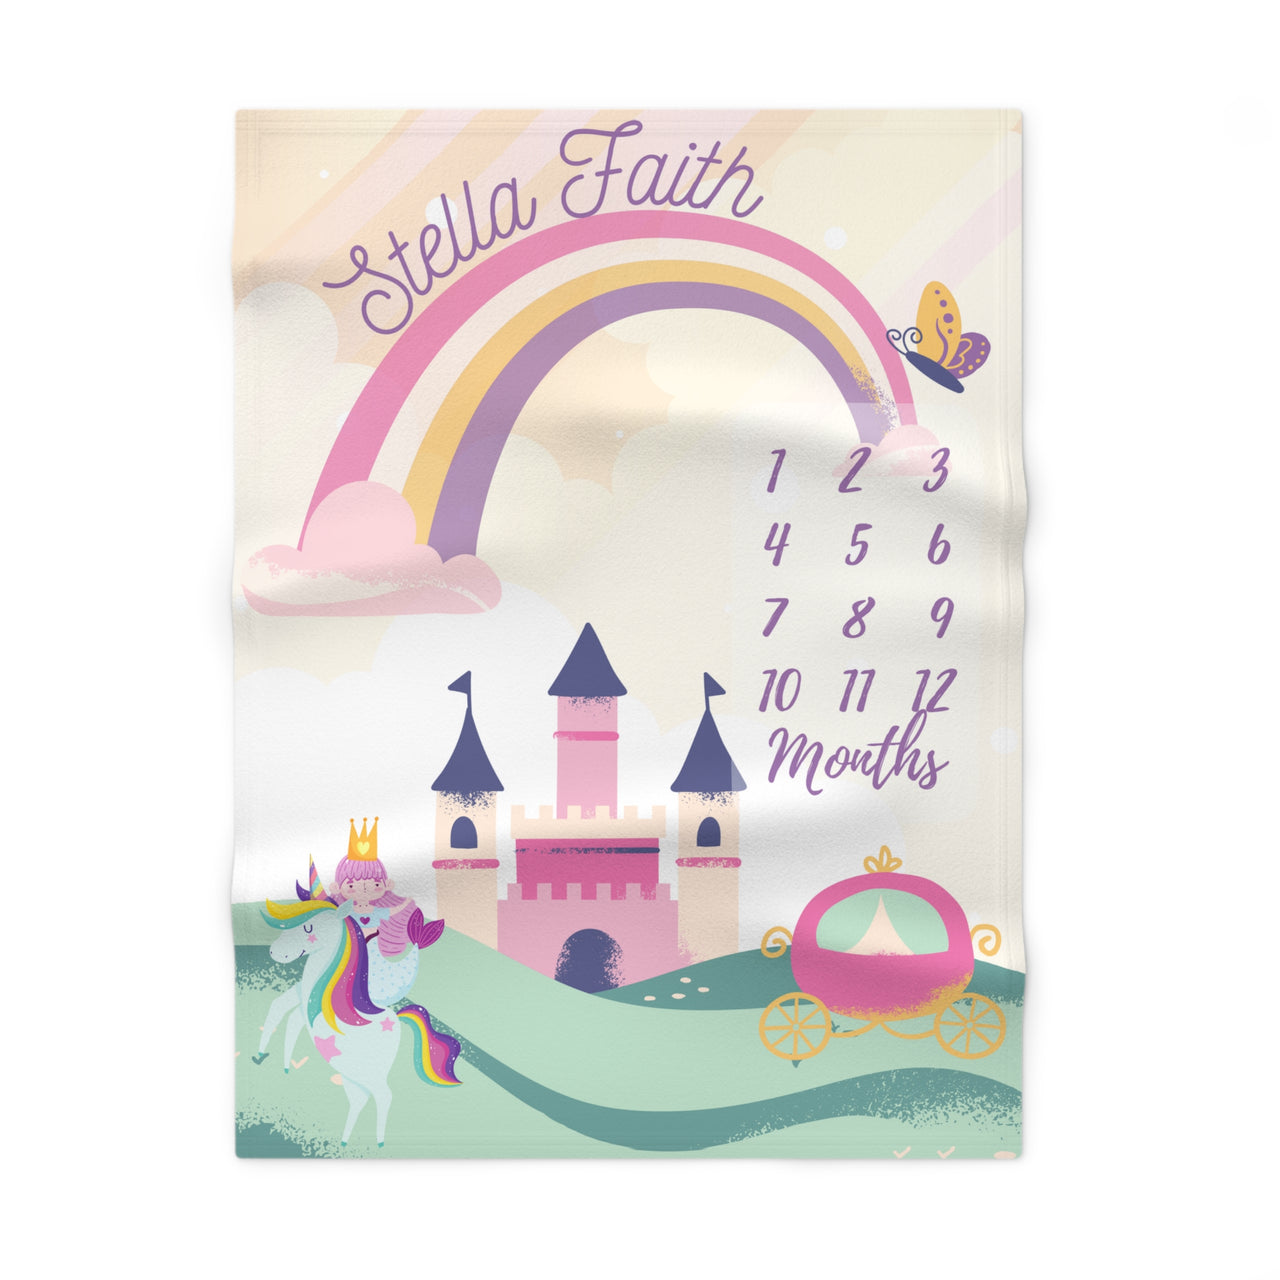 Fairytale Unicorn Rainbow Soft Fleece Milestone Blanket, Monthly Growth Tracker, Personalized Baby Blanket, Baby Shower Gift, Baby Gift